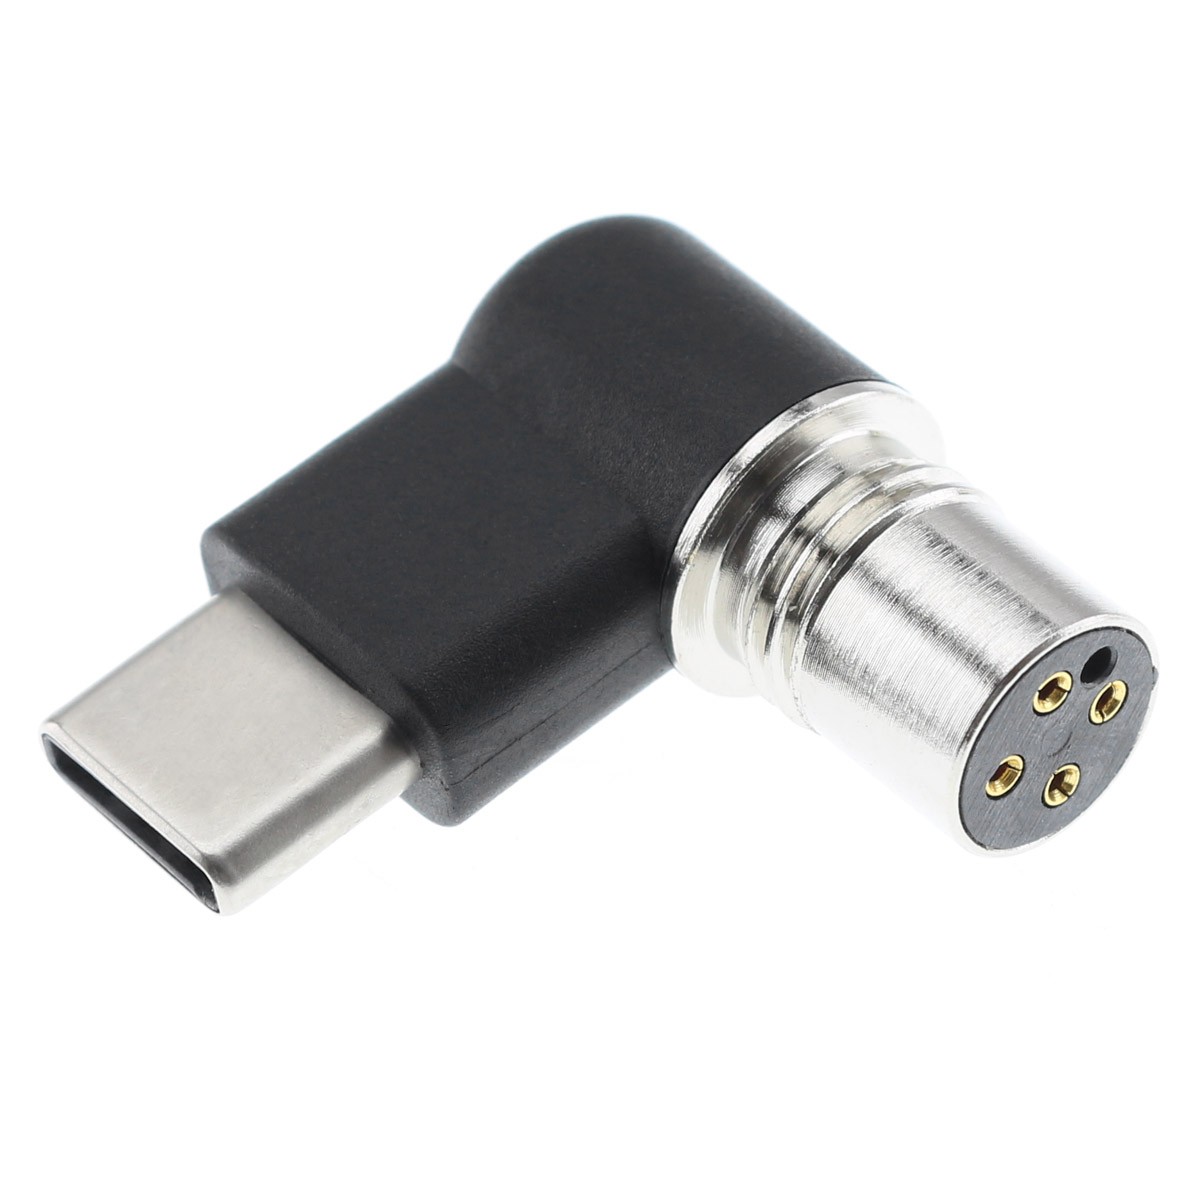 OEAUDIO MULTI-PLUG USB-C Connector with CS46L41 DAC